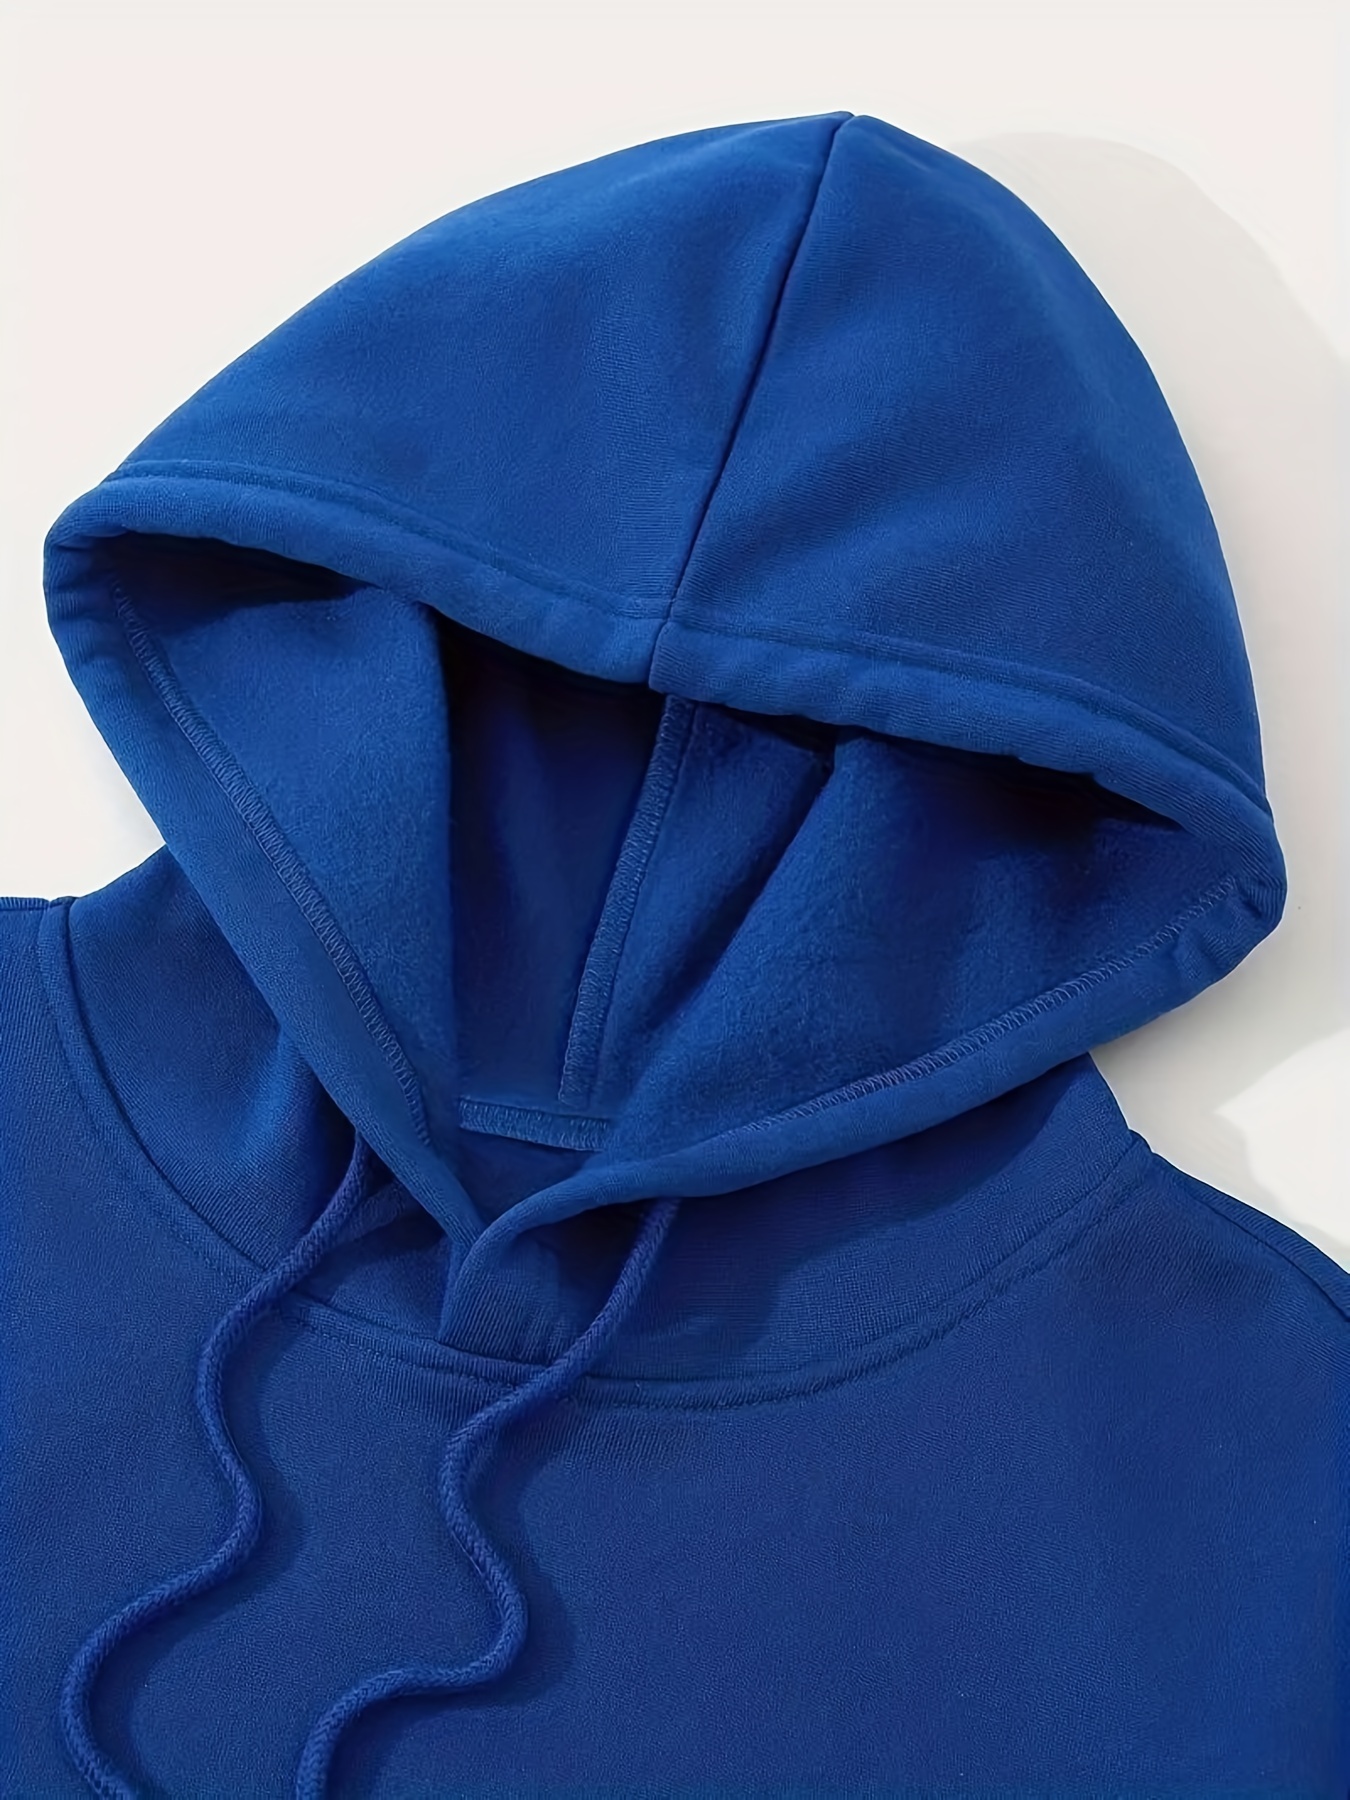 headphone smile print hoodie hoodies for men mens casual graphic design pullover hooded sweatshirt with kangaroo pocket streetwear for winter fall as gifts details 7